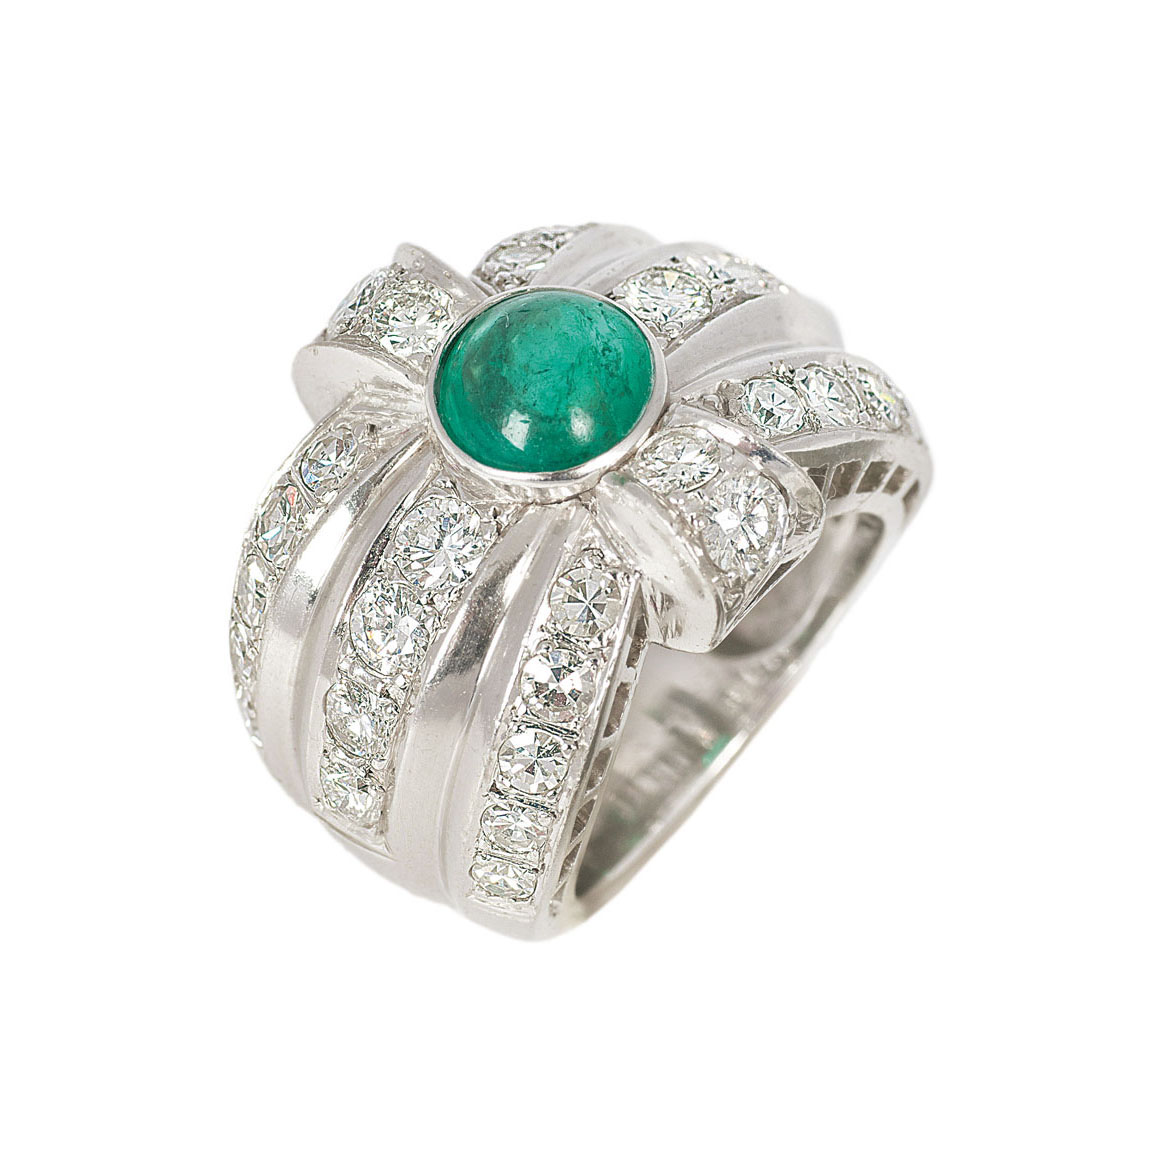 A wide emerald diamond ring